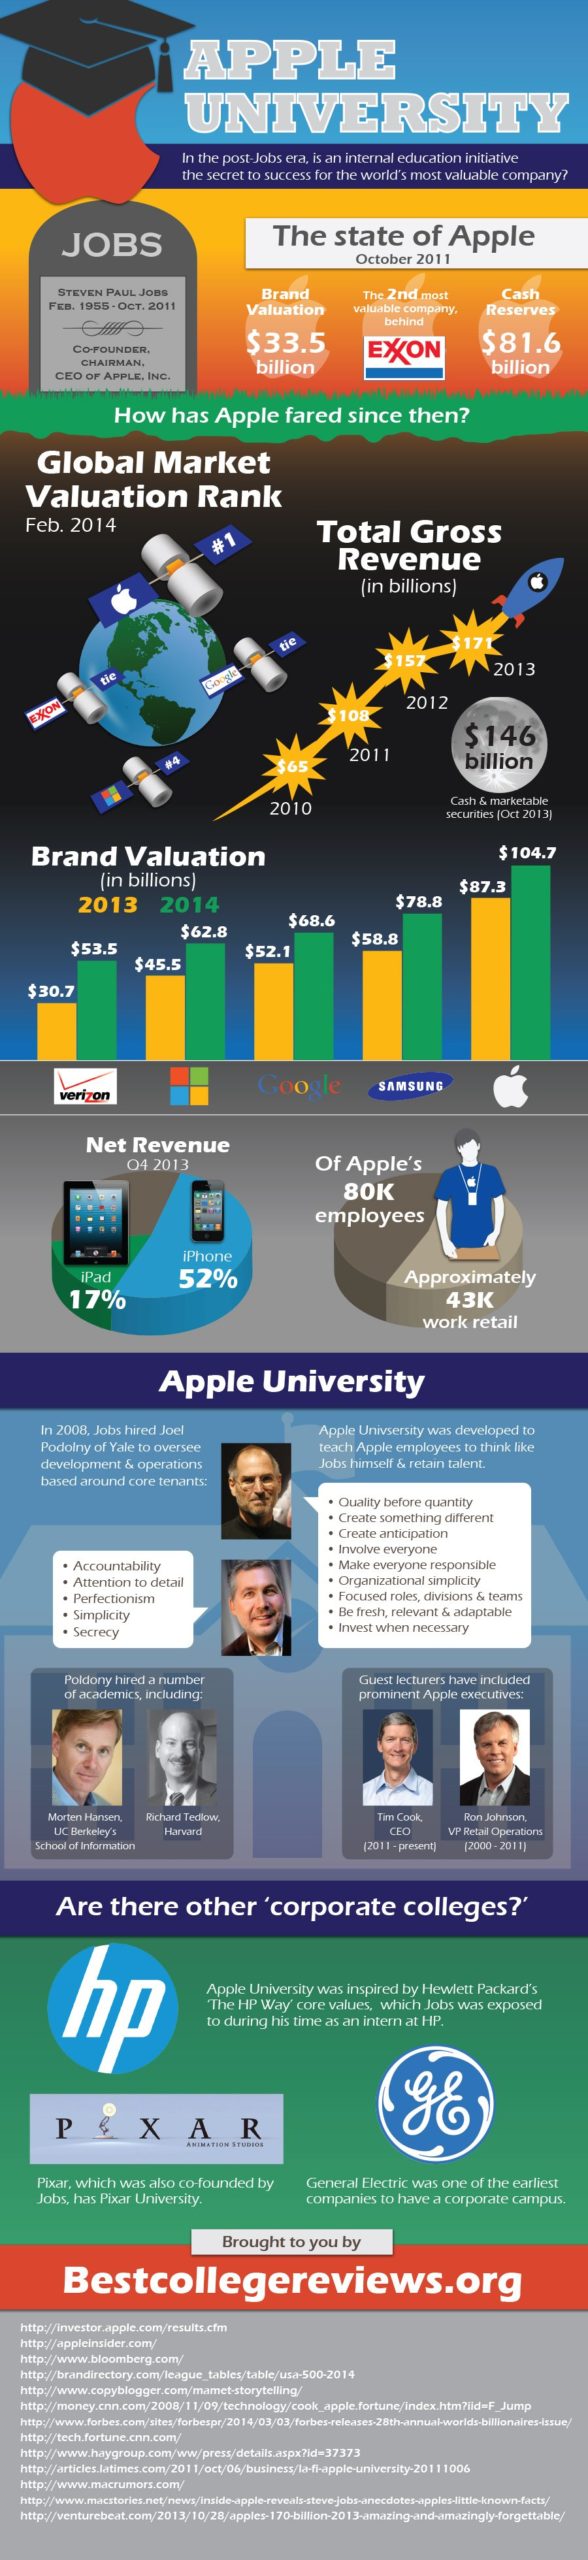 apple_university